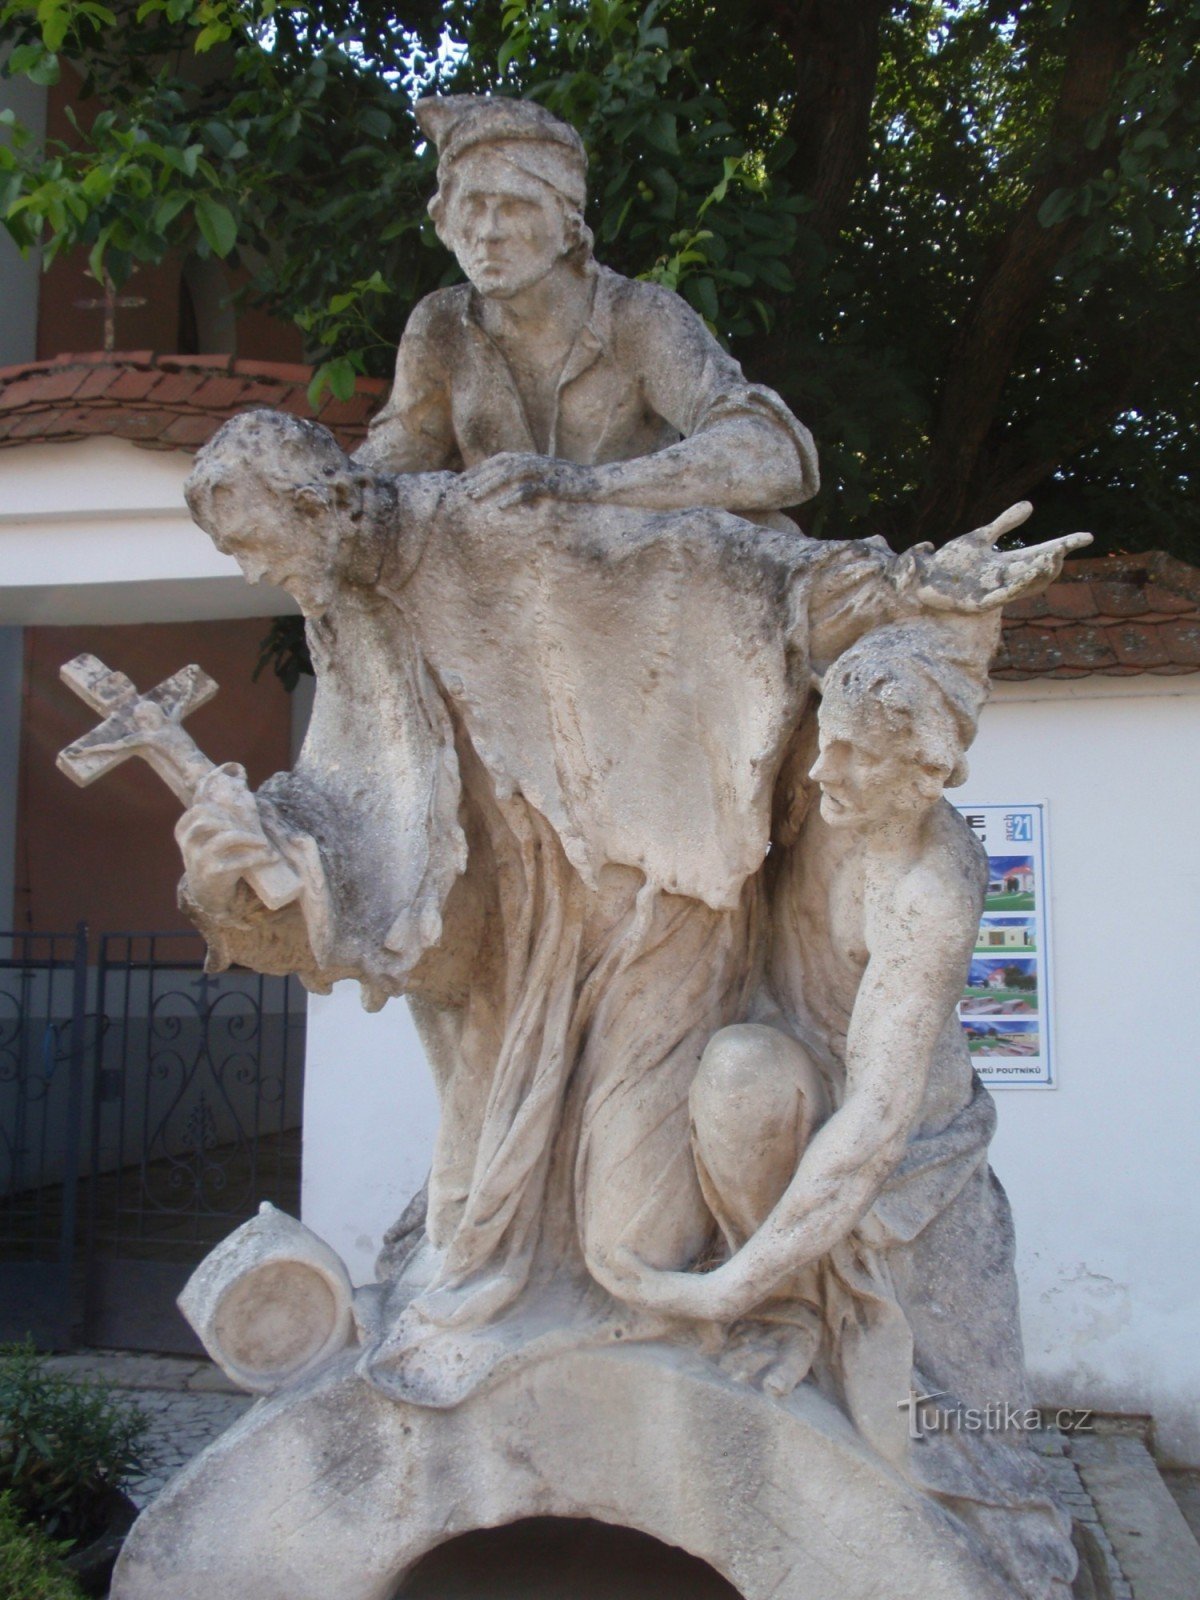 Statues in Žarošice